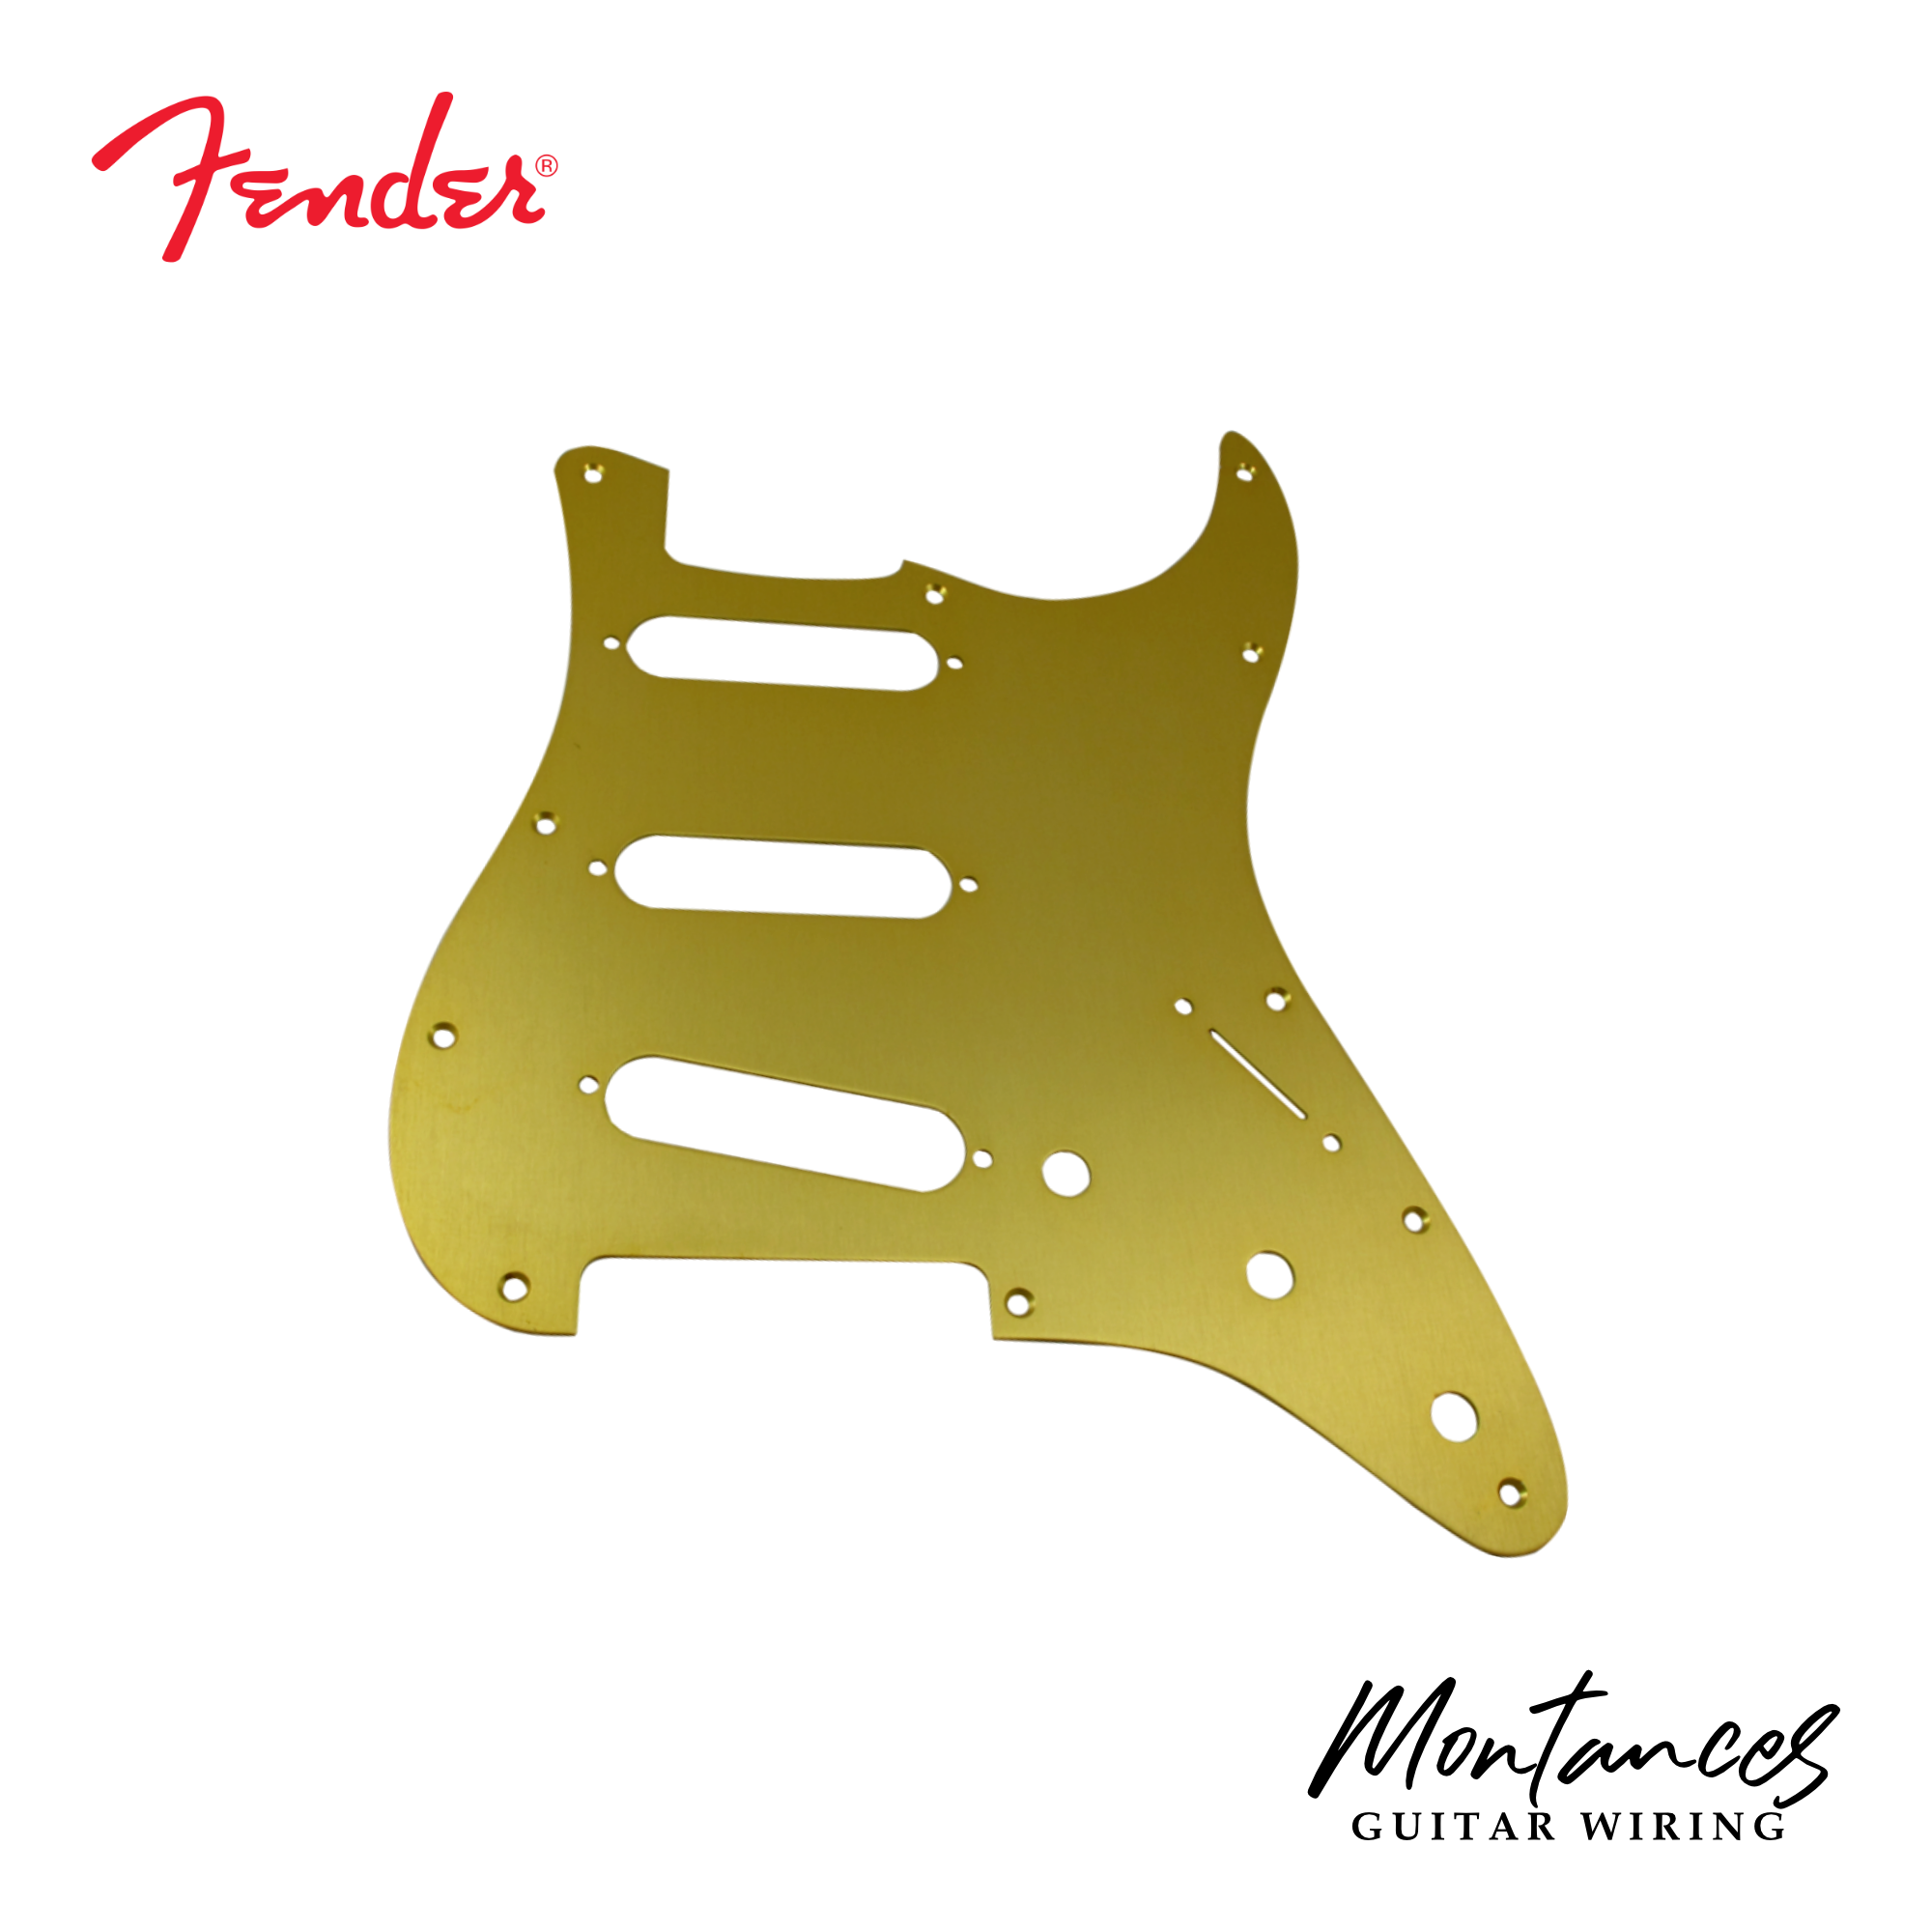 Pickguard for Fender® American Stratocaster, 11-hole